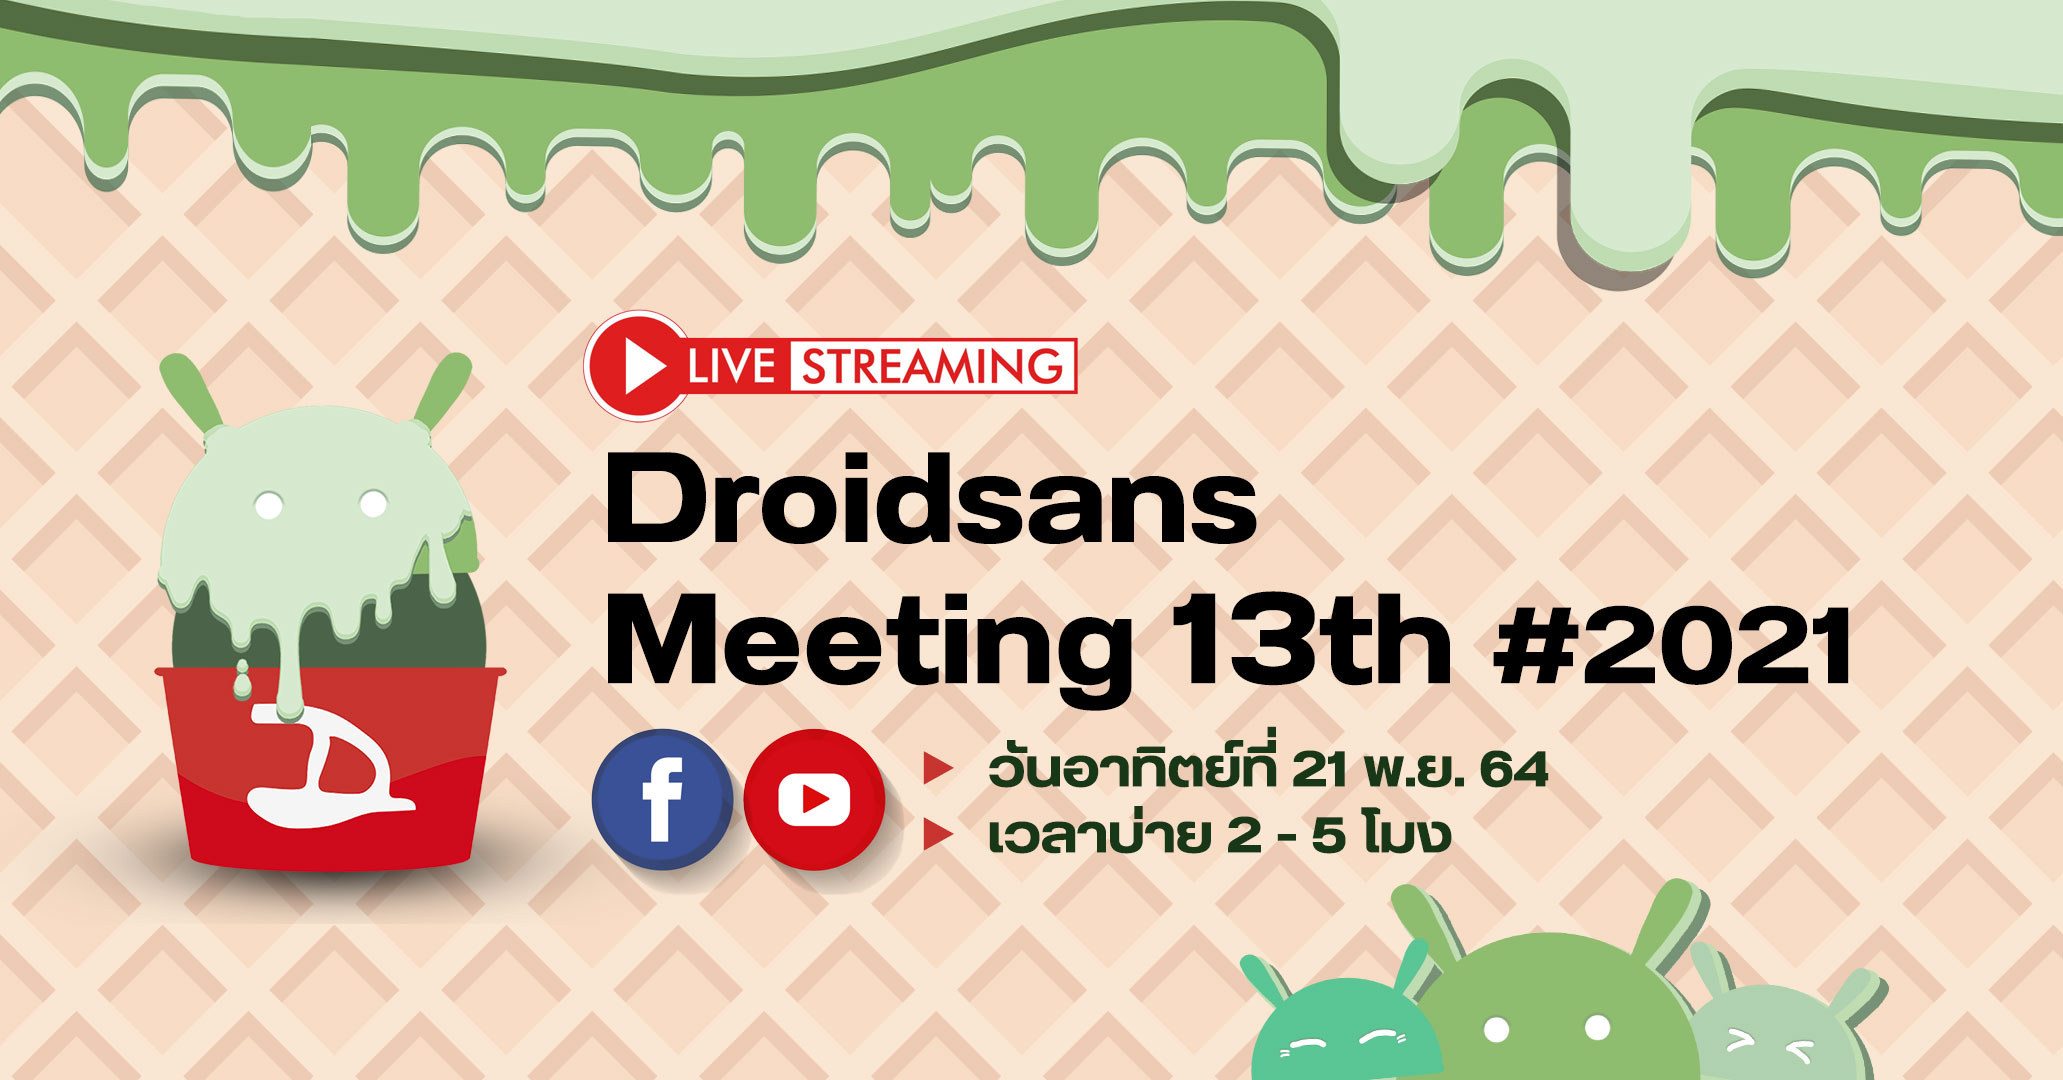 Droidsans Meeting 2021 ปุบปับเพราะคิดถึง อยากจัด มาจอยกันนะ